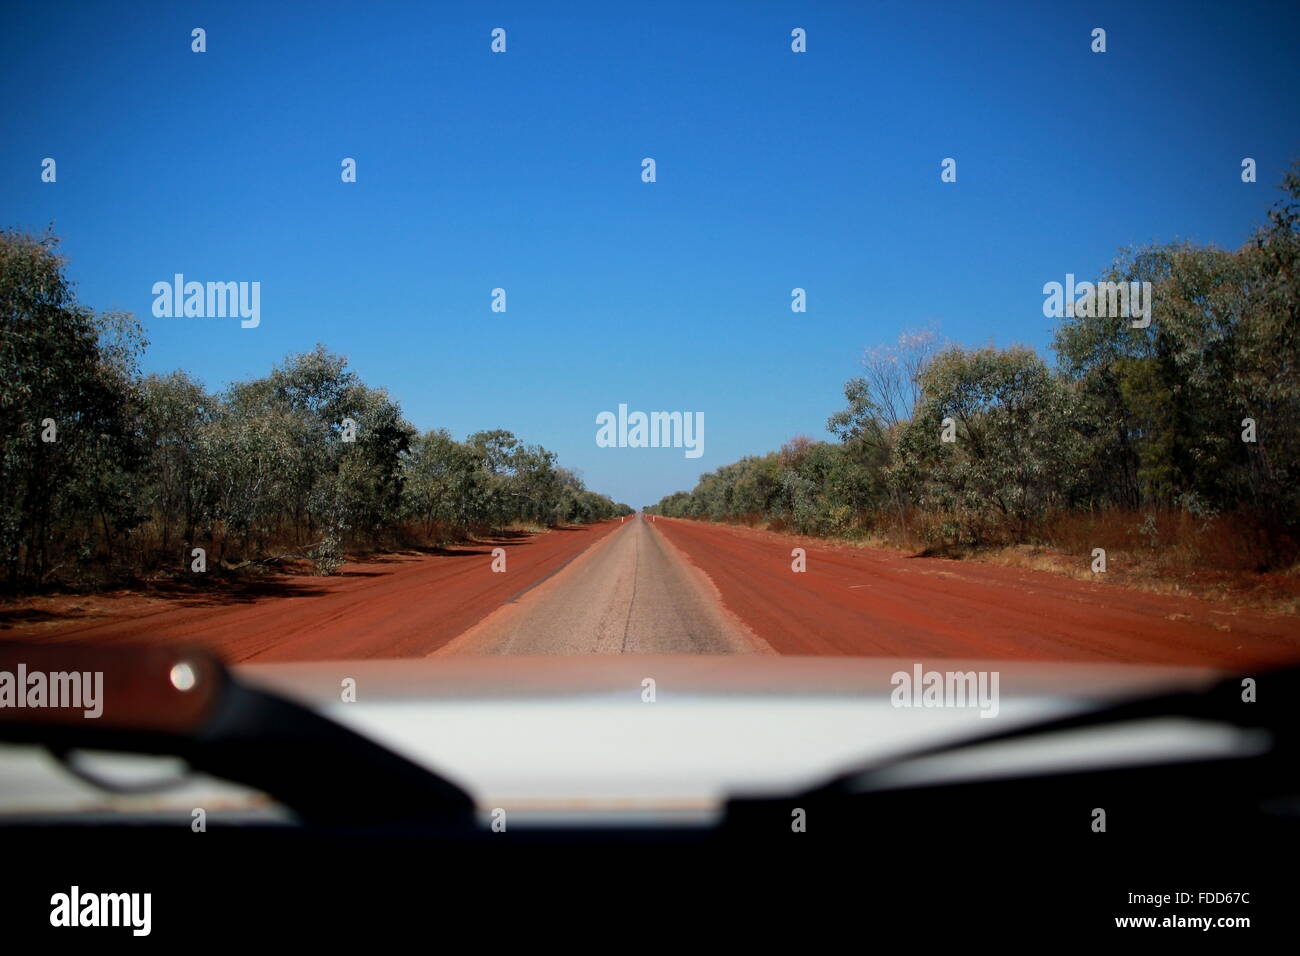 outback road in australia Stock Photo